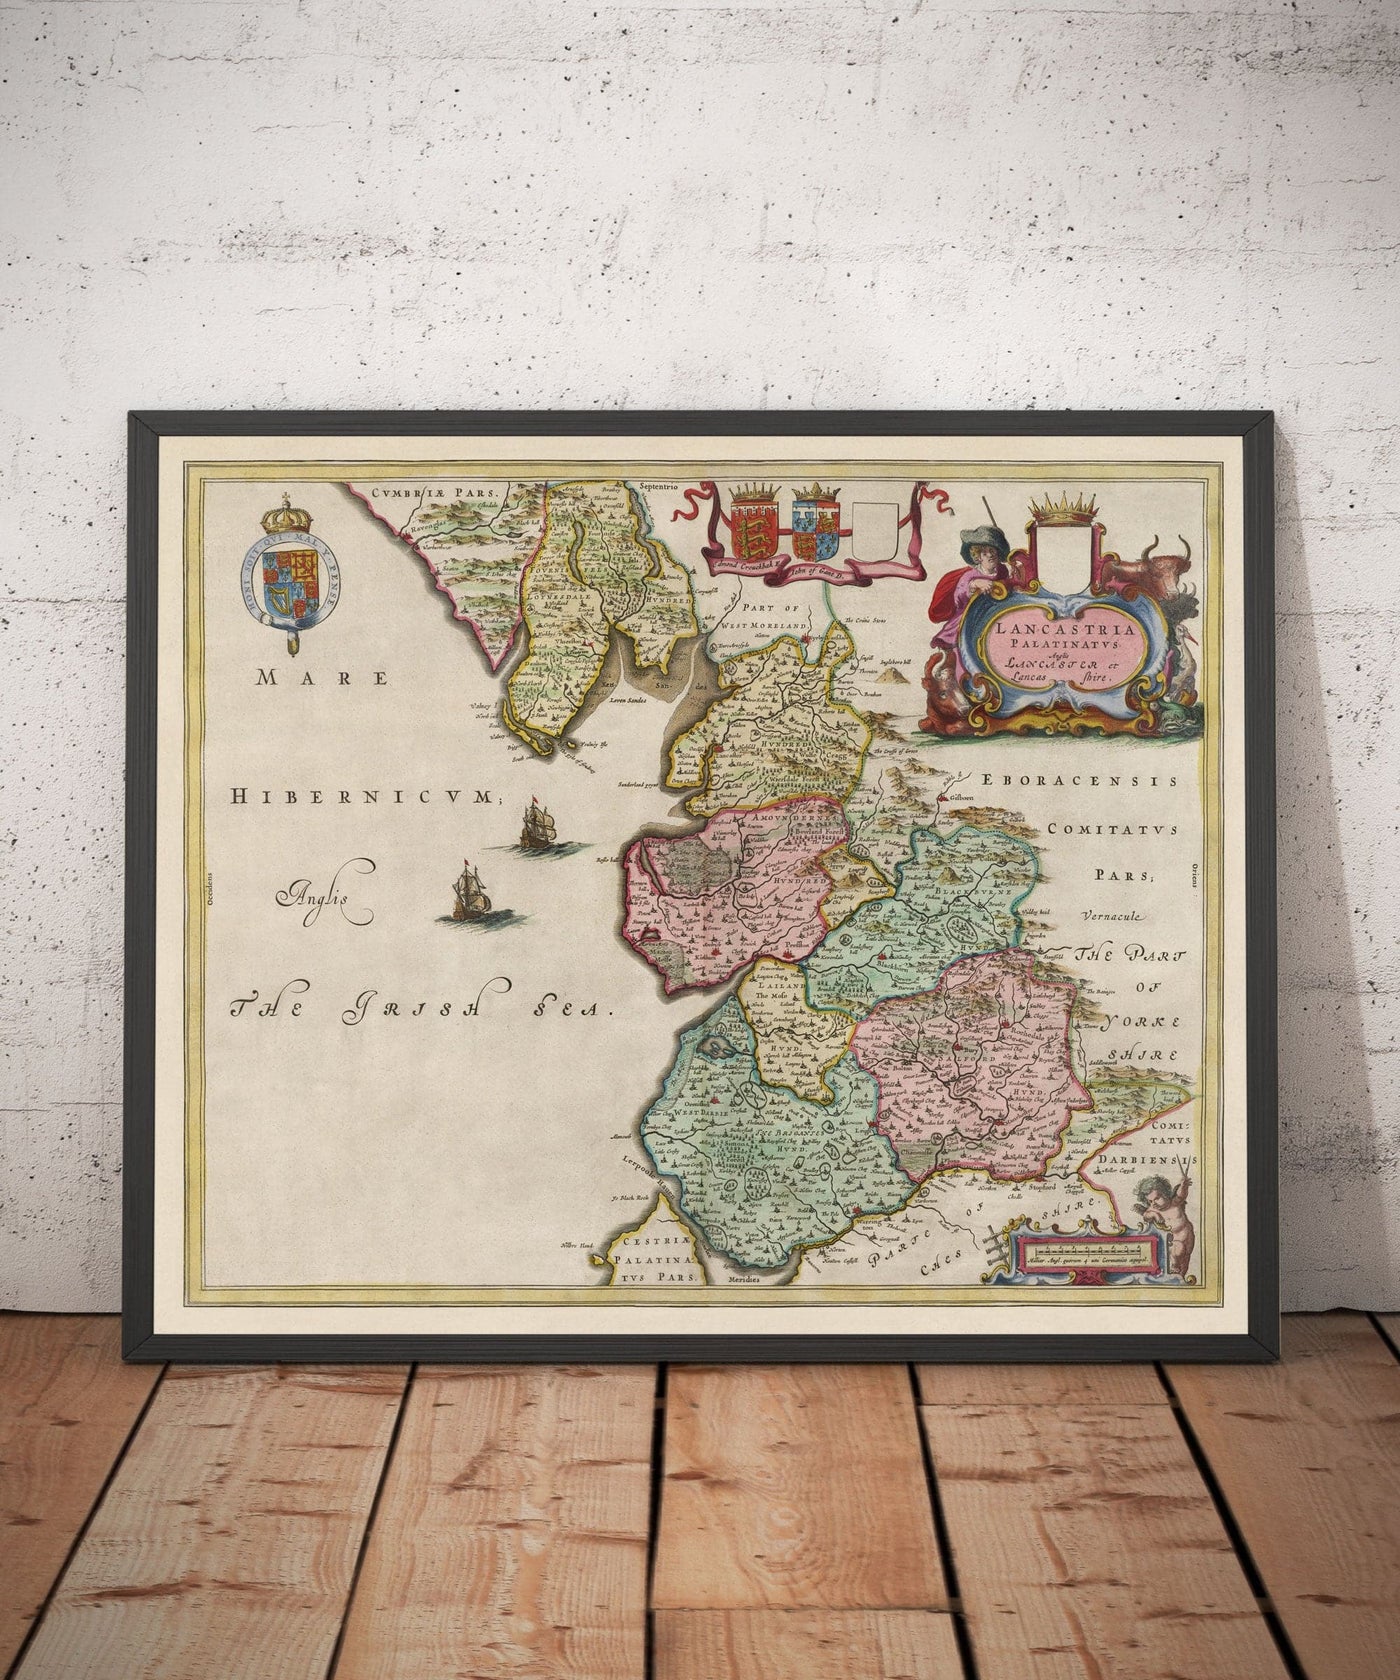 Old Map of Lancashire, 1654 by Joan Blaeu - Manchester, Liverpool, Preston, Blackburn, Windermere